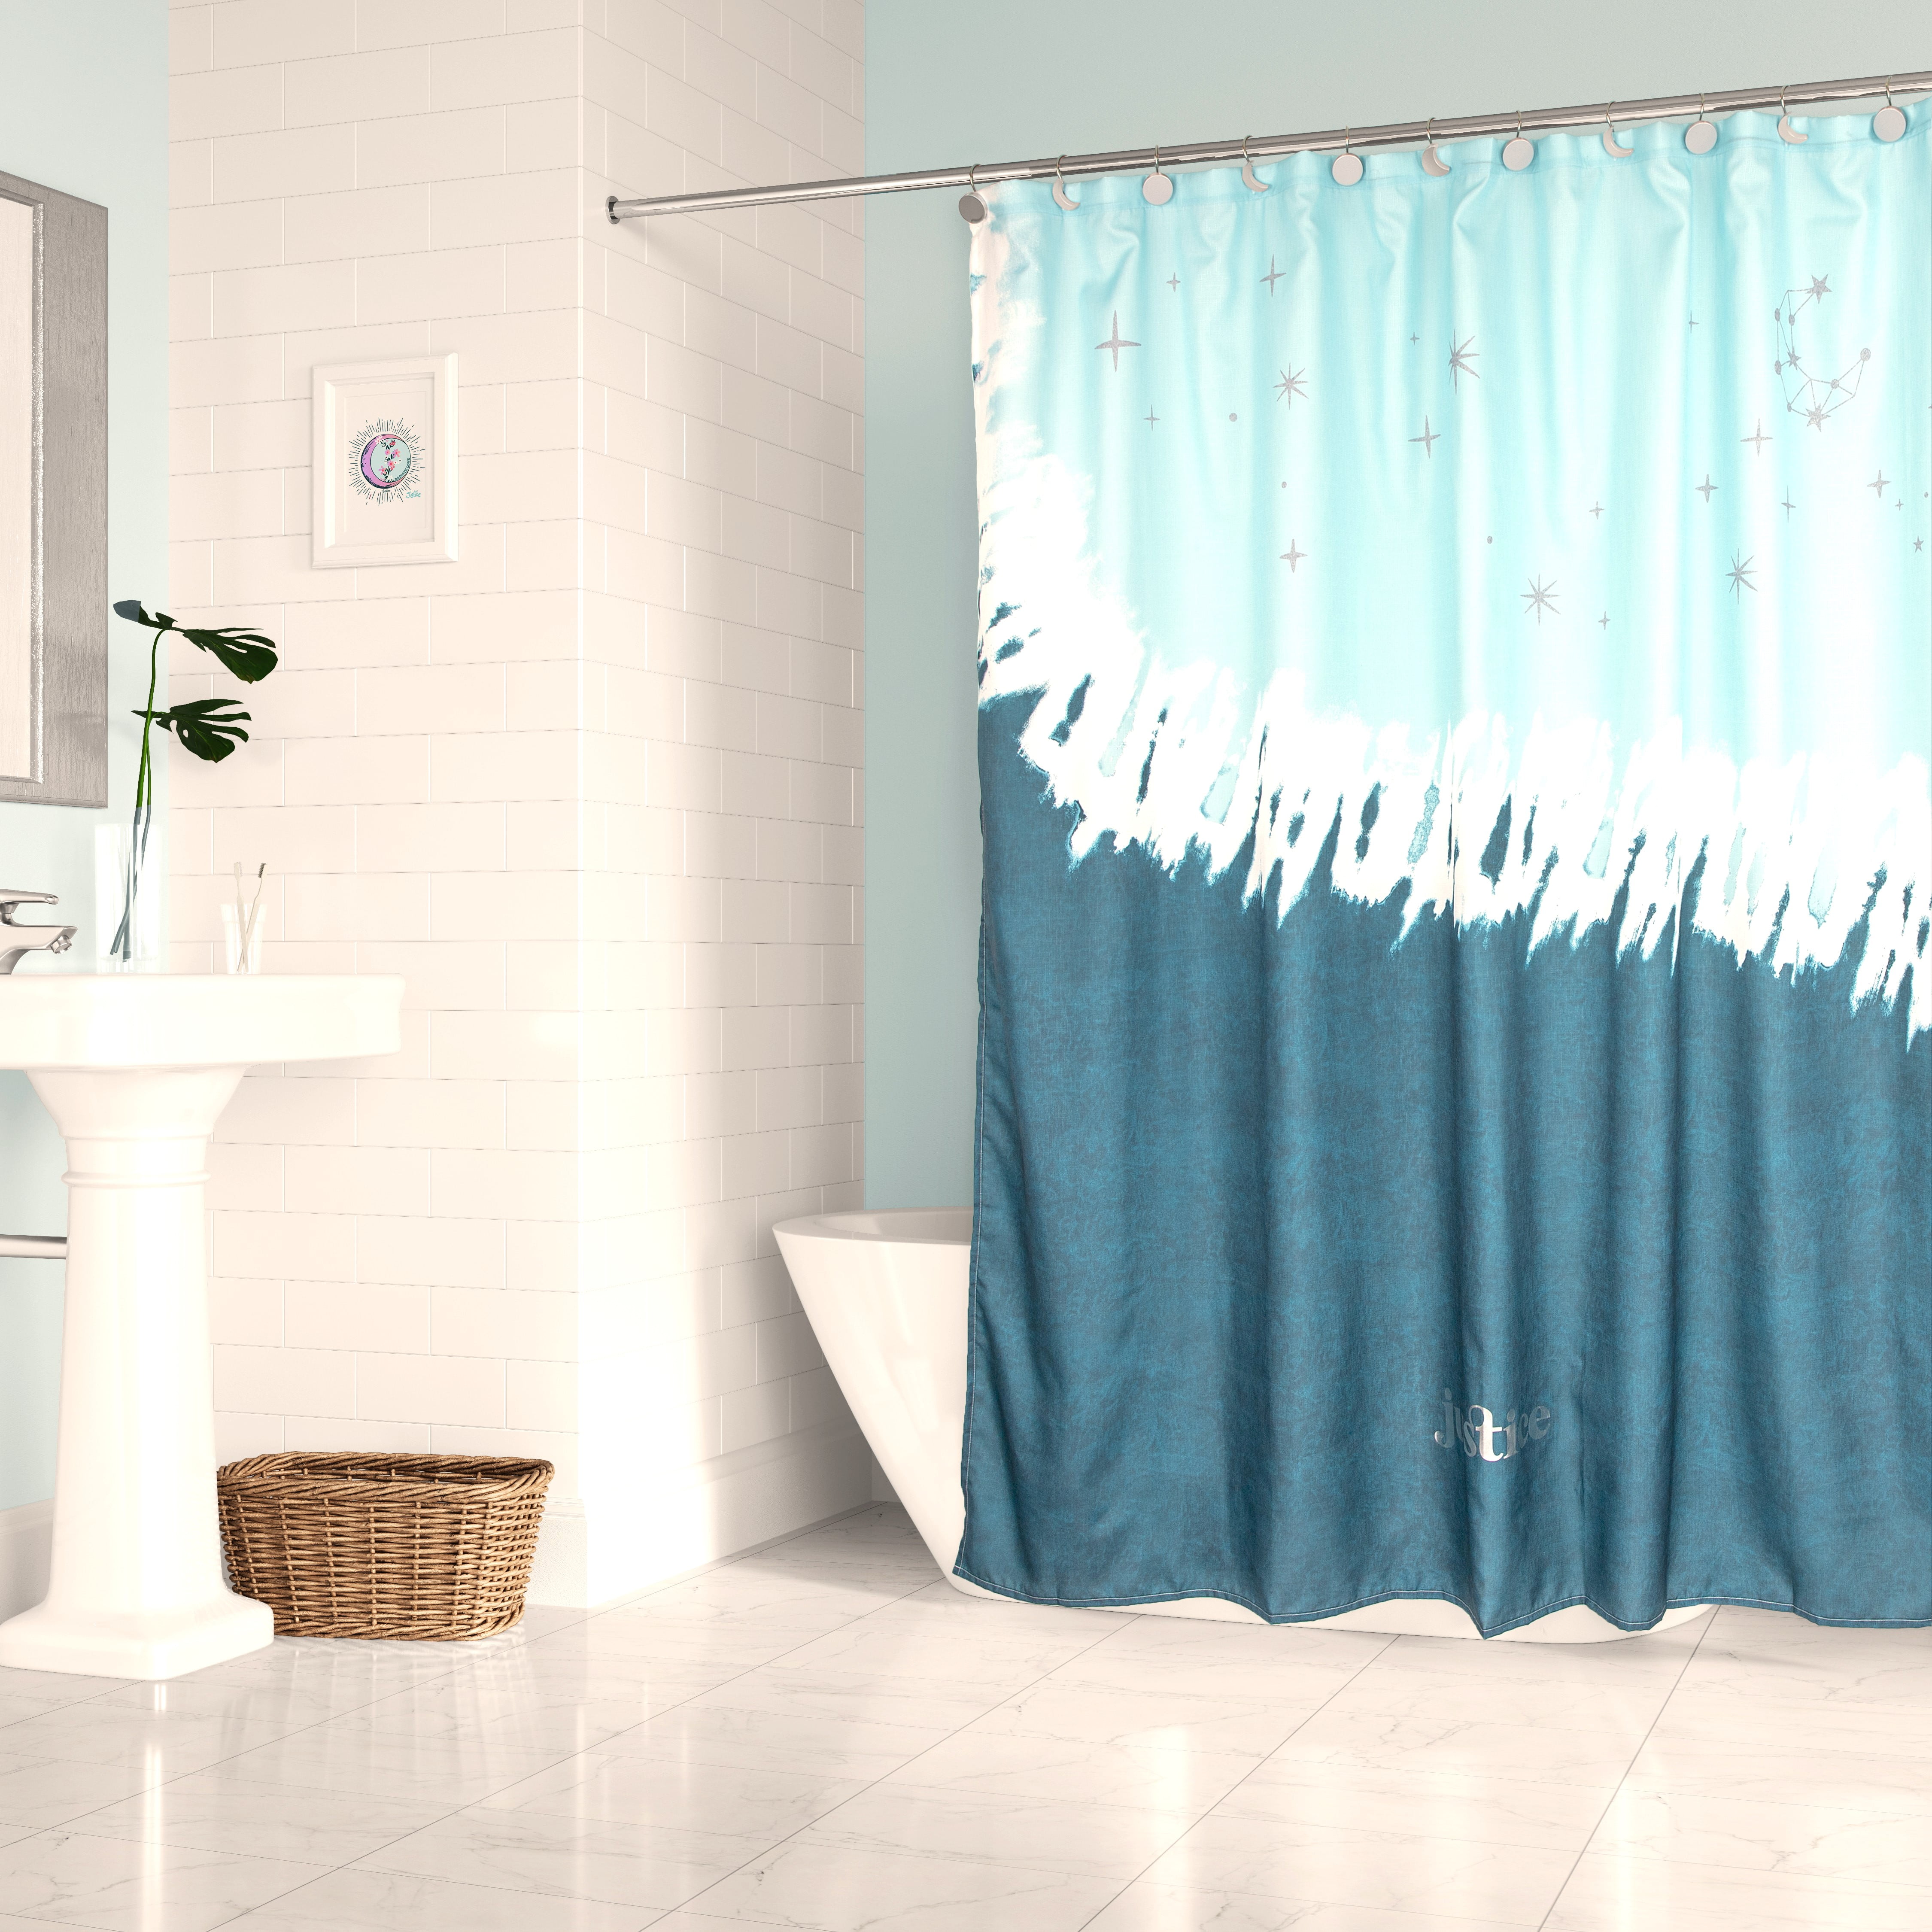 Royal Blue Shower Curtain Waterproof Fabric Plain Color 12 Hooks /Bathroom Mat 